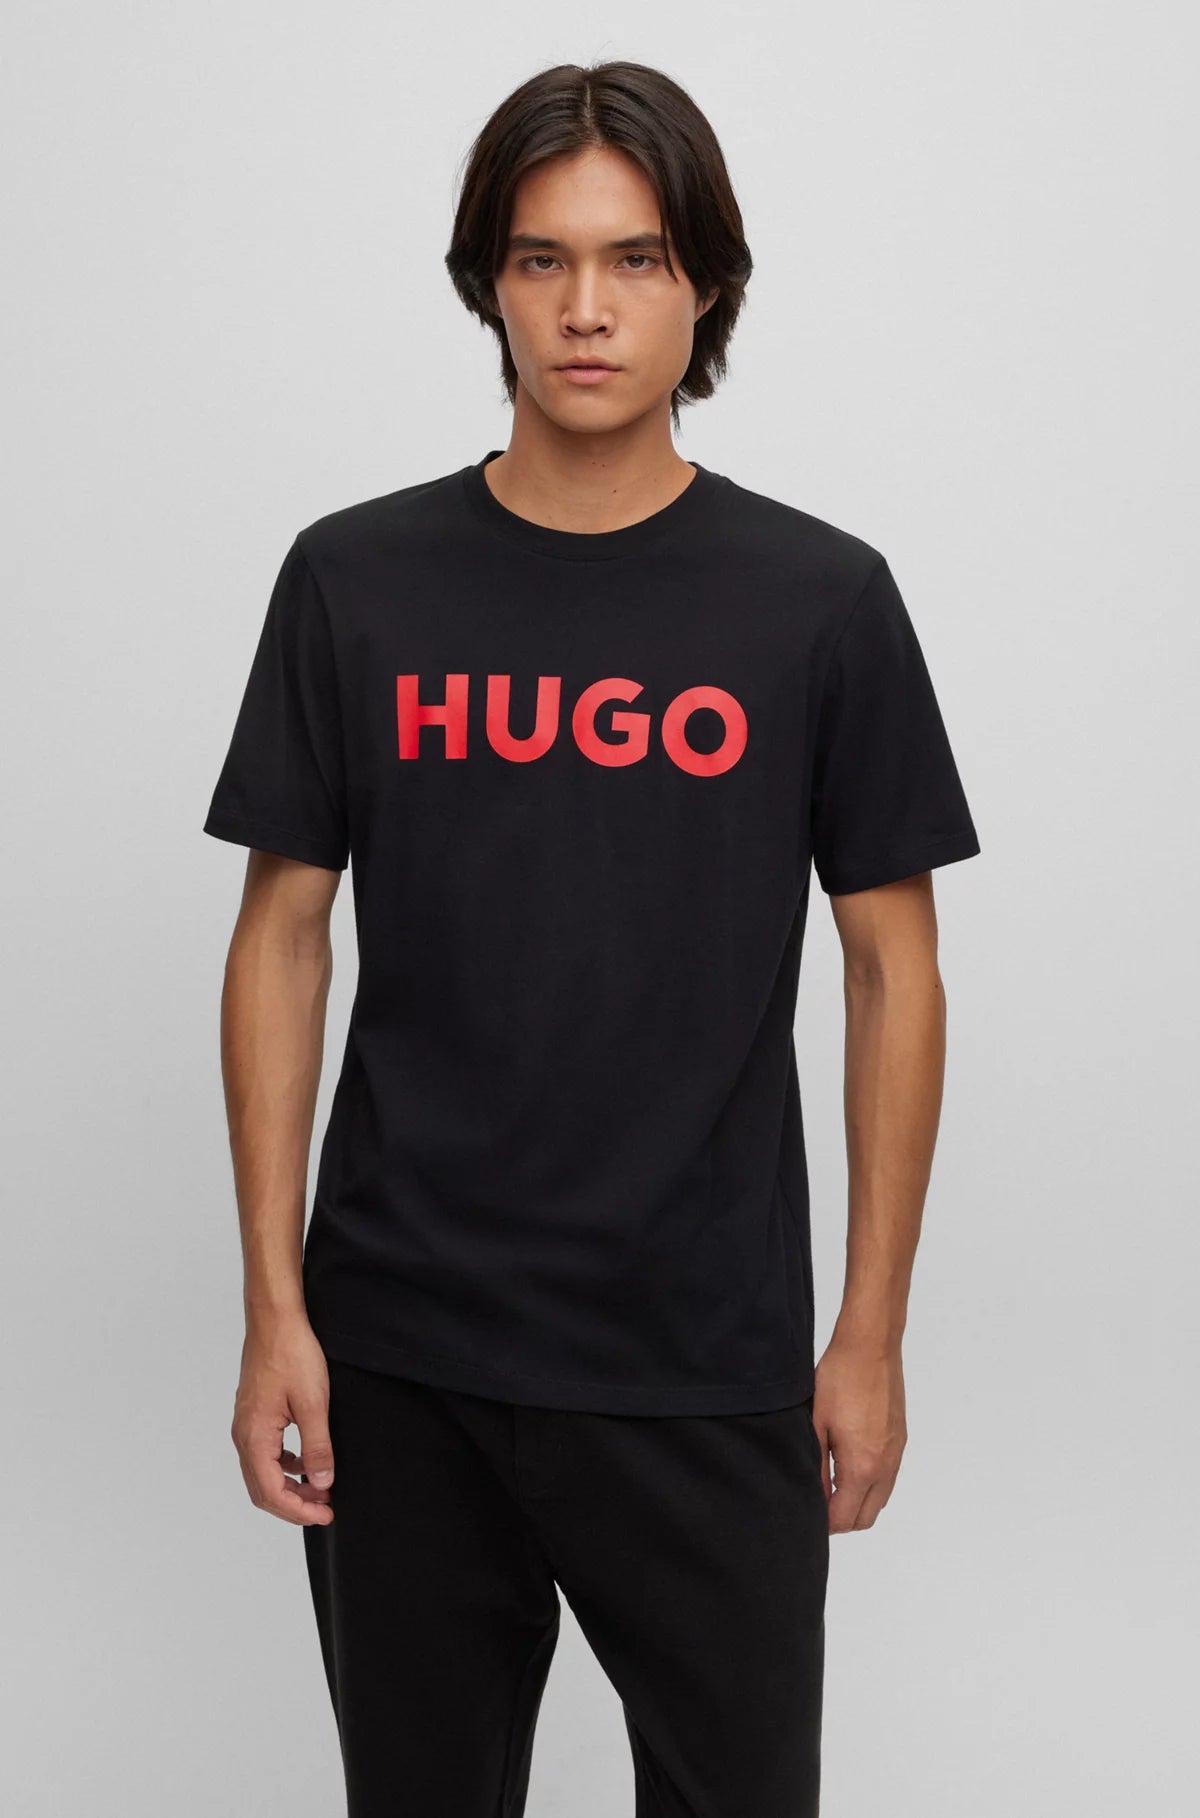 HUGO DULIVIO T-SHIRT MED LOGO